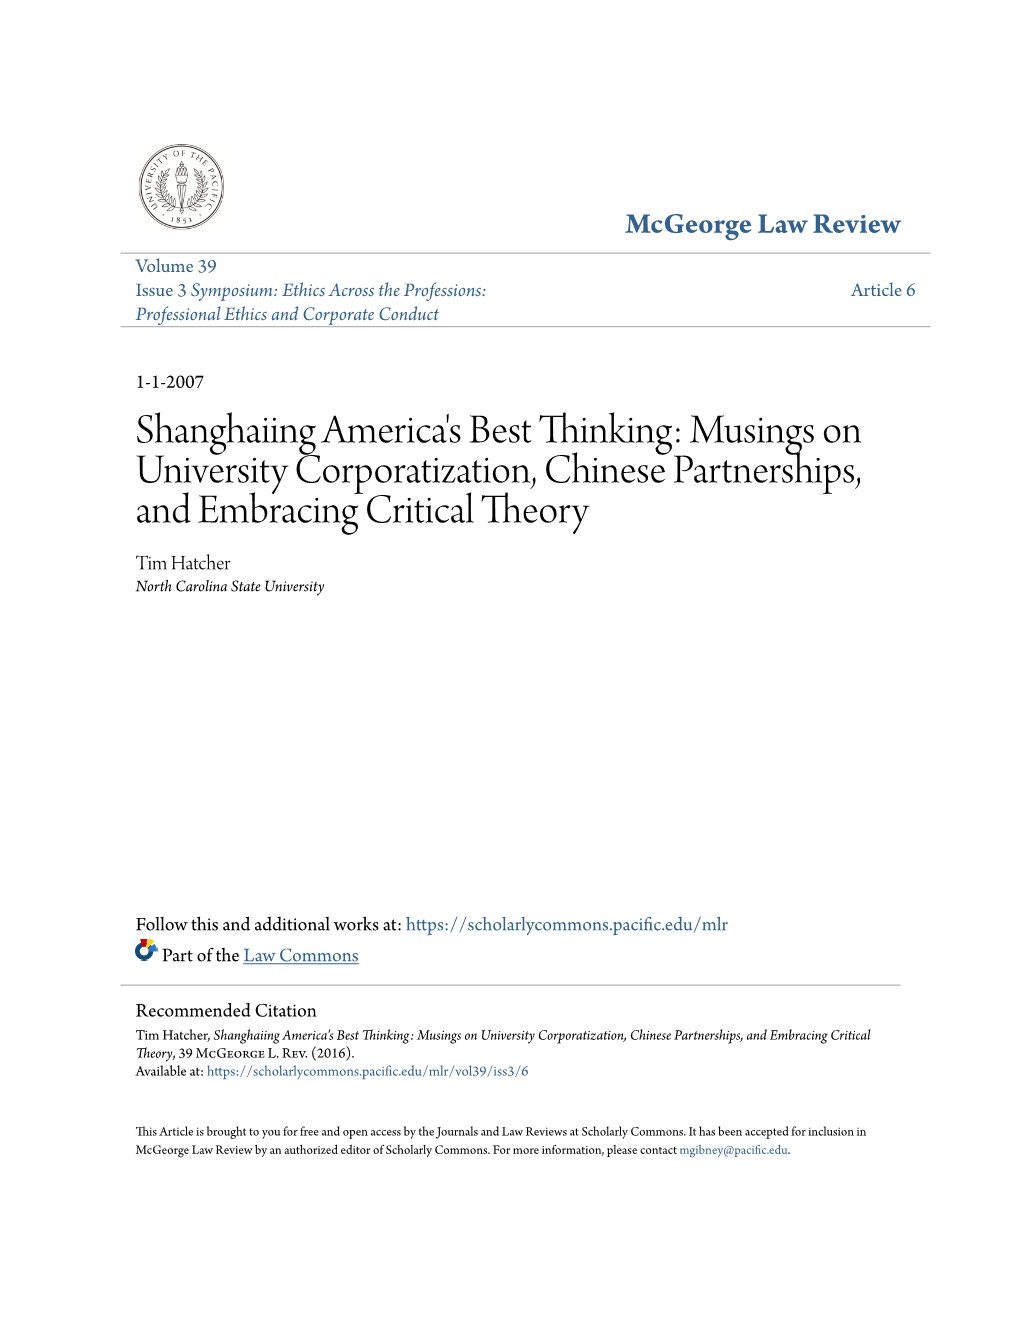 Shanghaiing America's Best Thinking: Musings on University